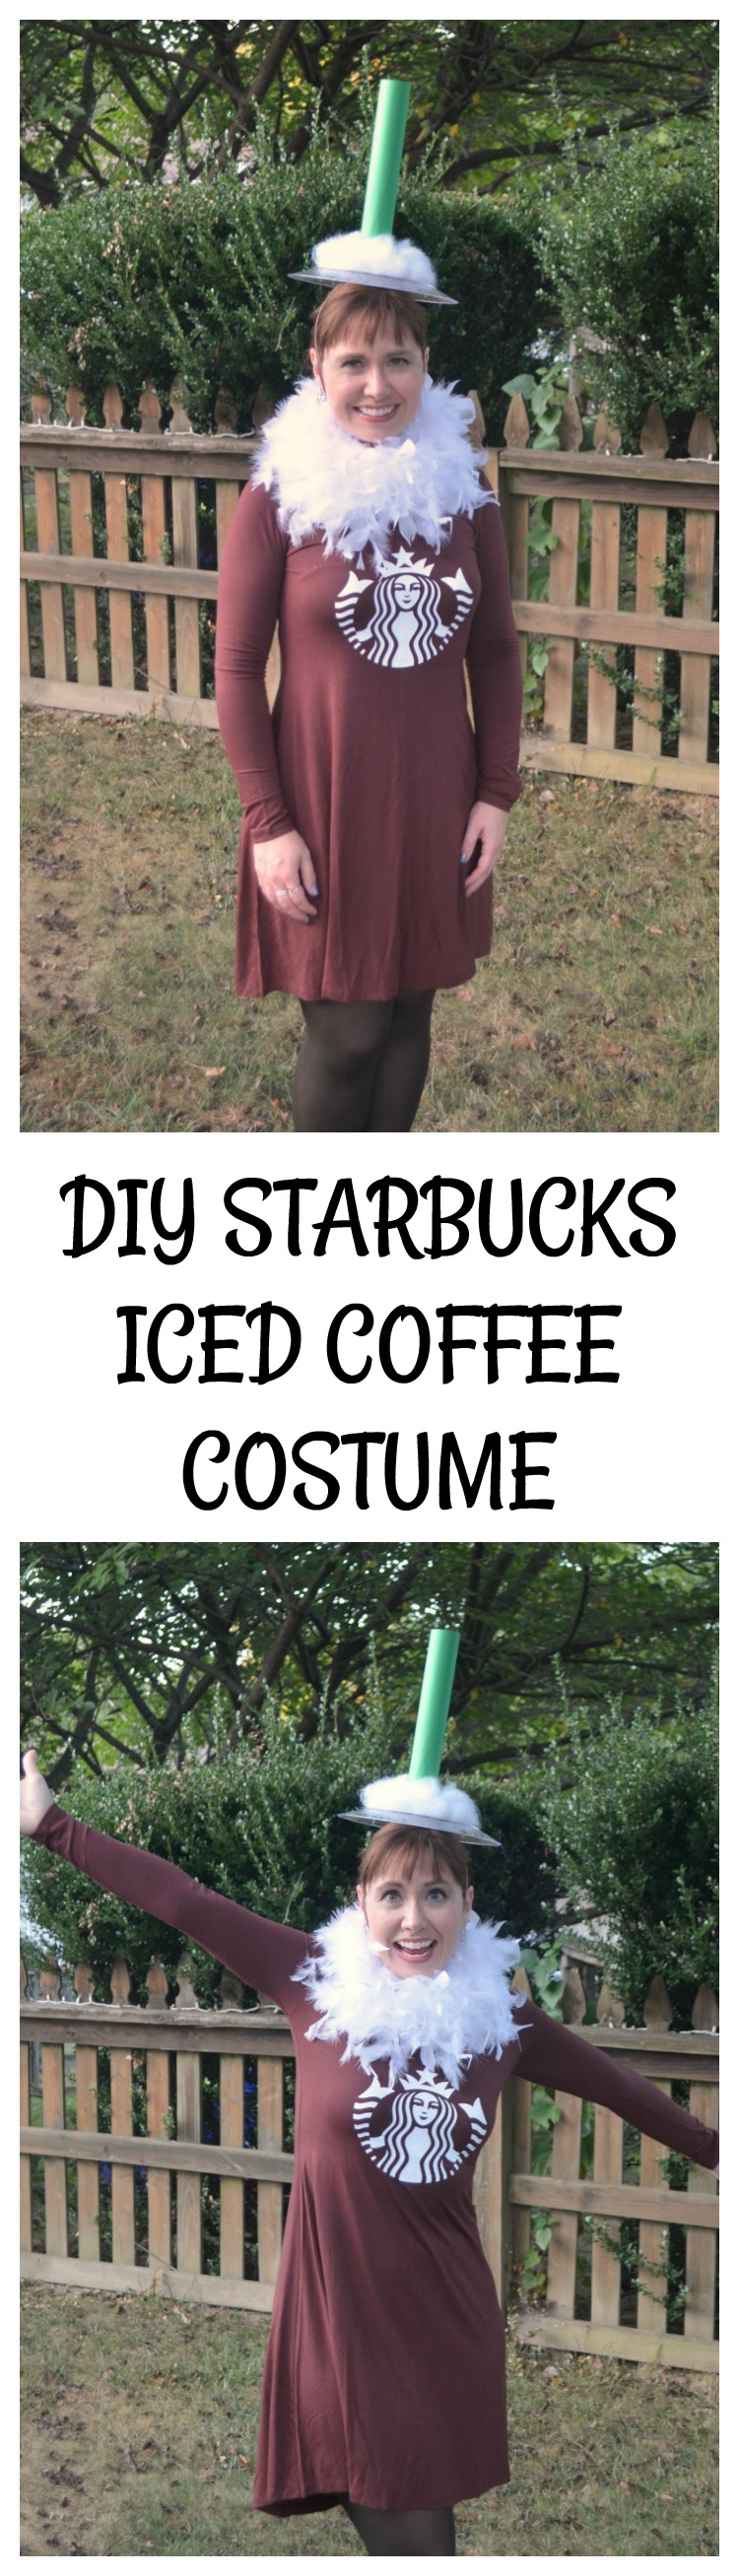 DIY Starbucks Iced Coffee Costume